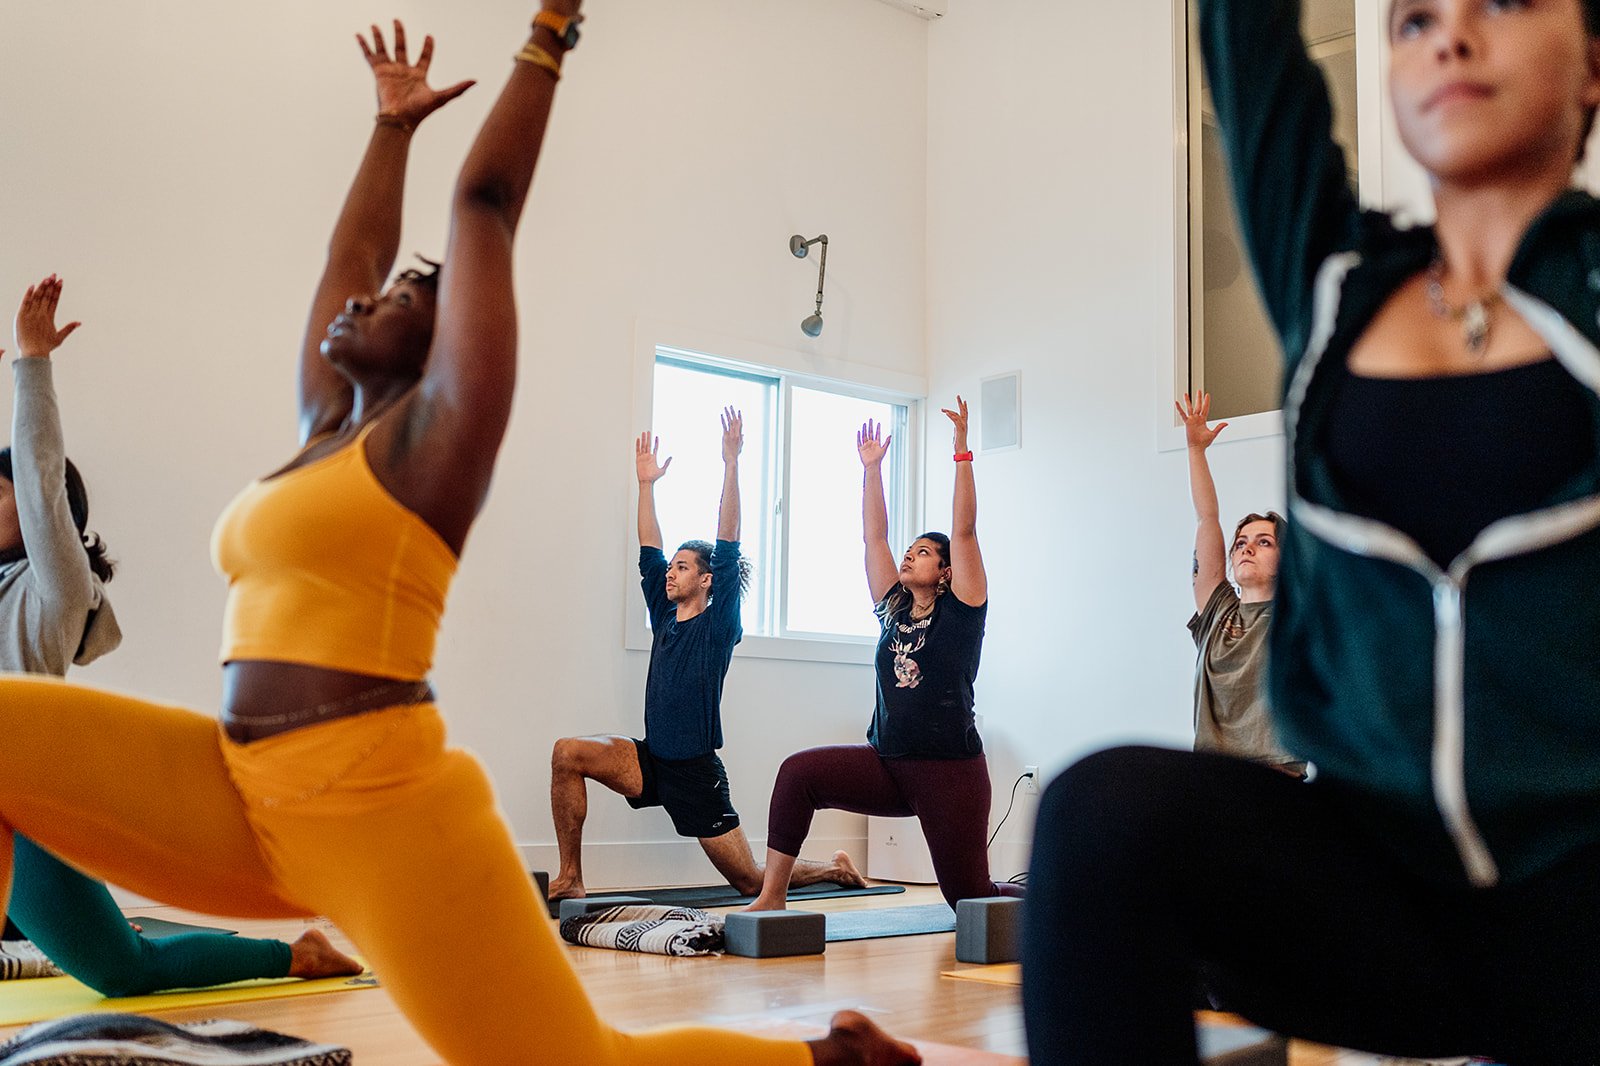 JP Centre Yoga - Community Minded Yoga Studio, Best of Boston 2018